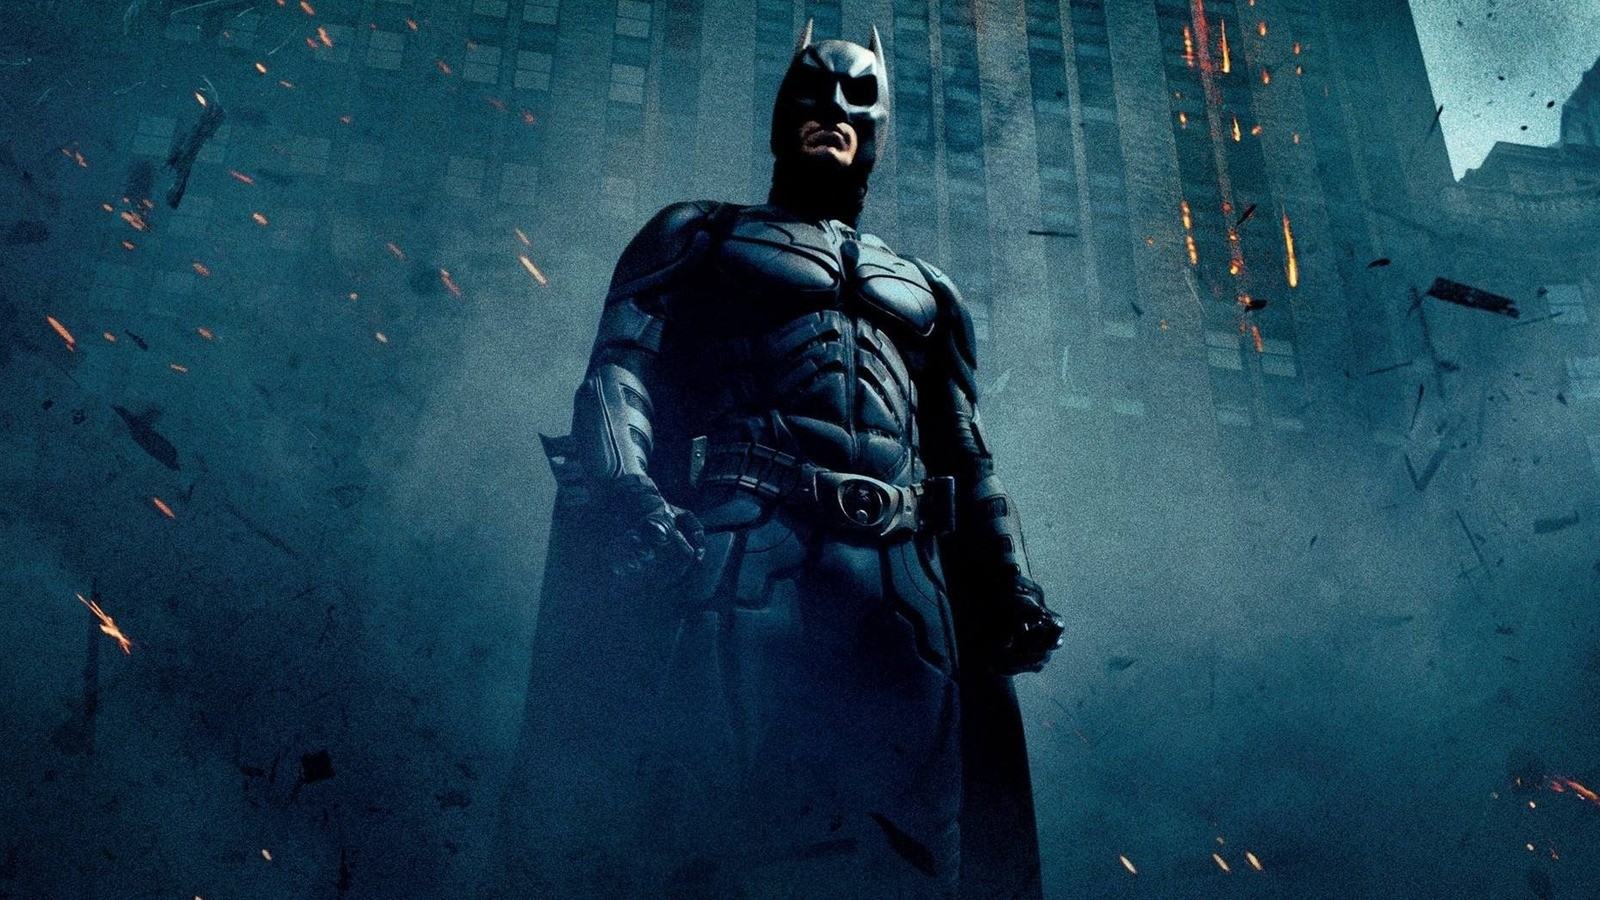 The Dark Knight Trilogy by Christopher Nolan